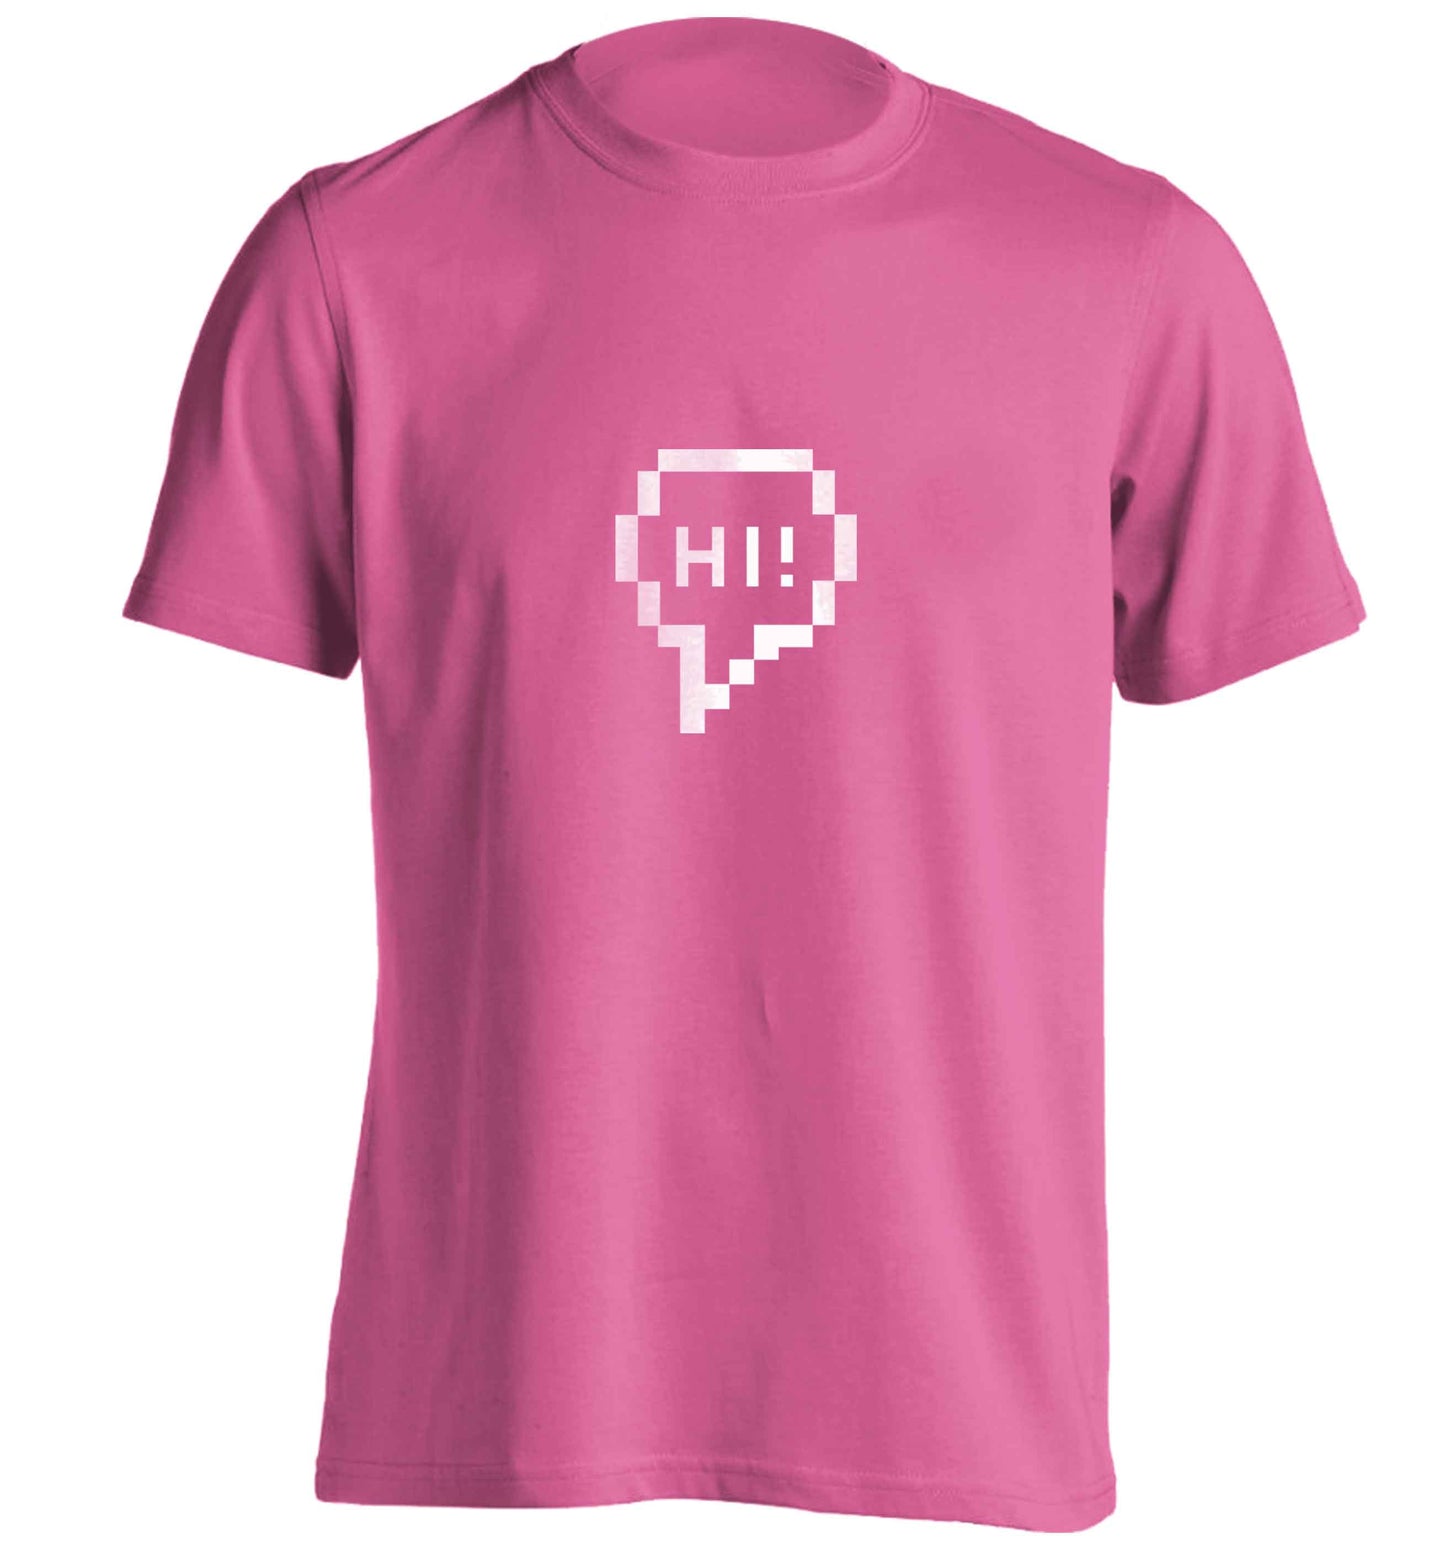 Hi adults unisex pink Tshirt 2XL